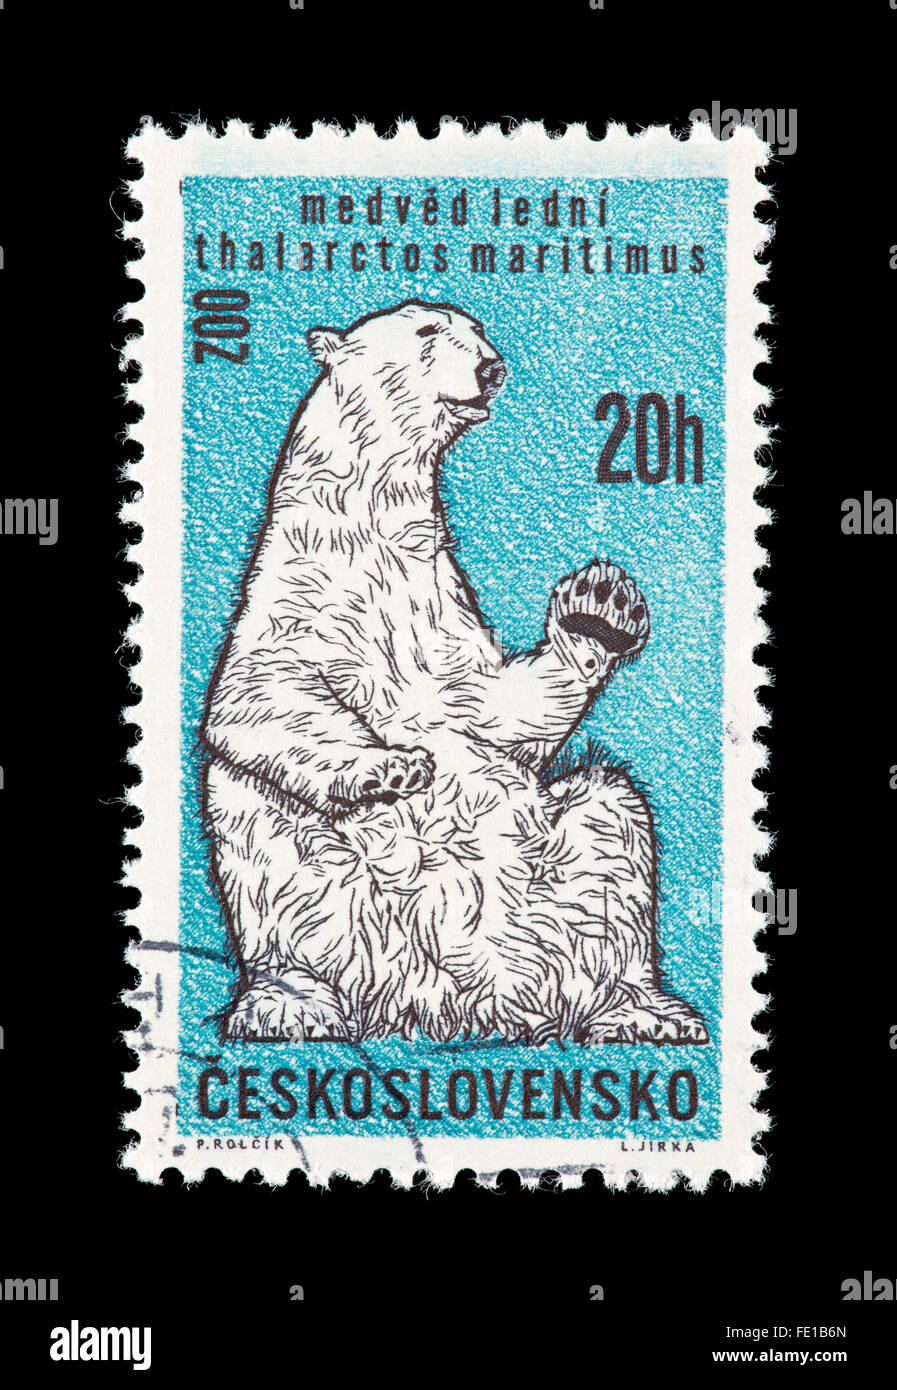 Postage stamp from Czechoslovakia depicting a polar bear (Ursus maritimus) Stock Photo